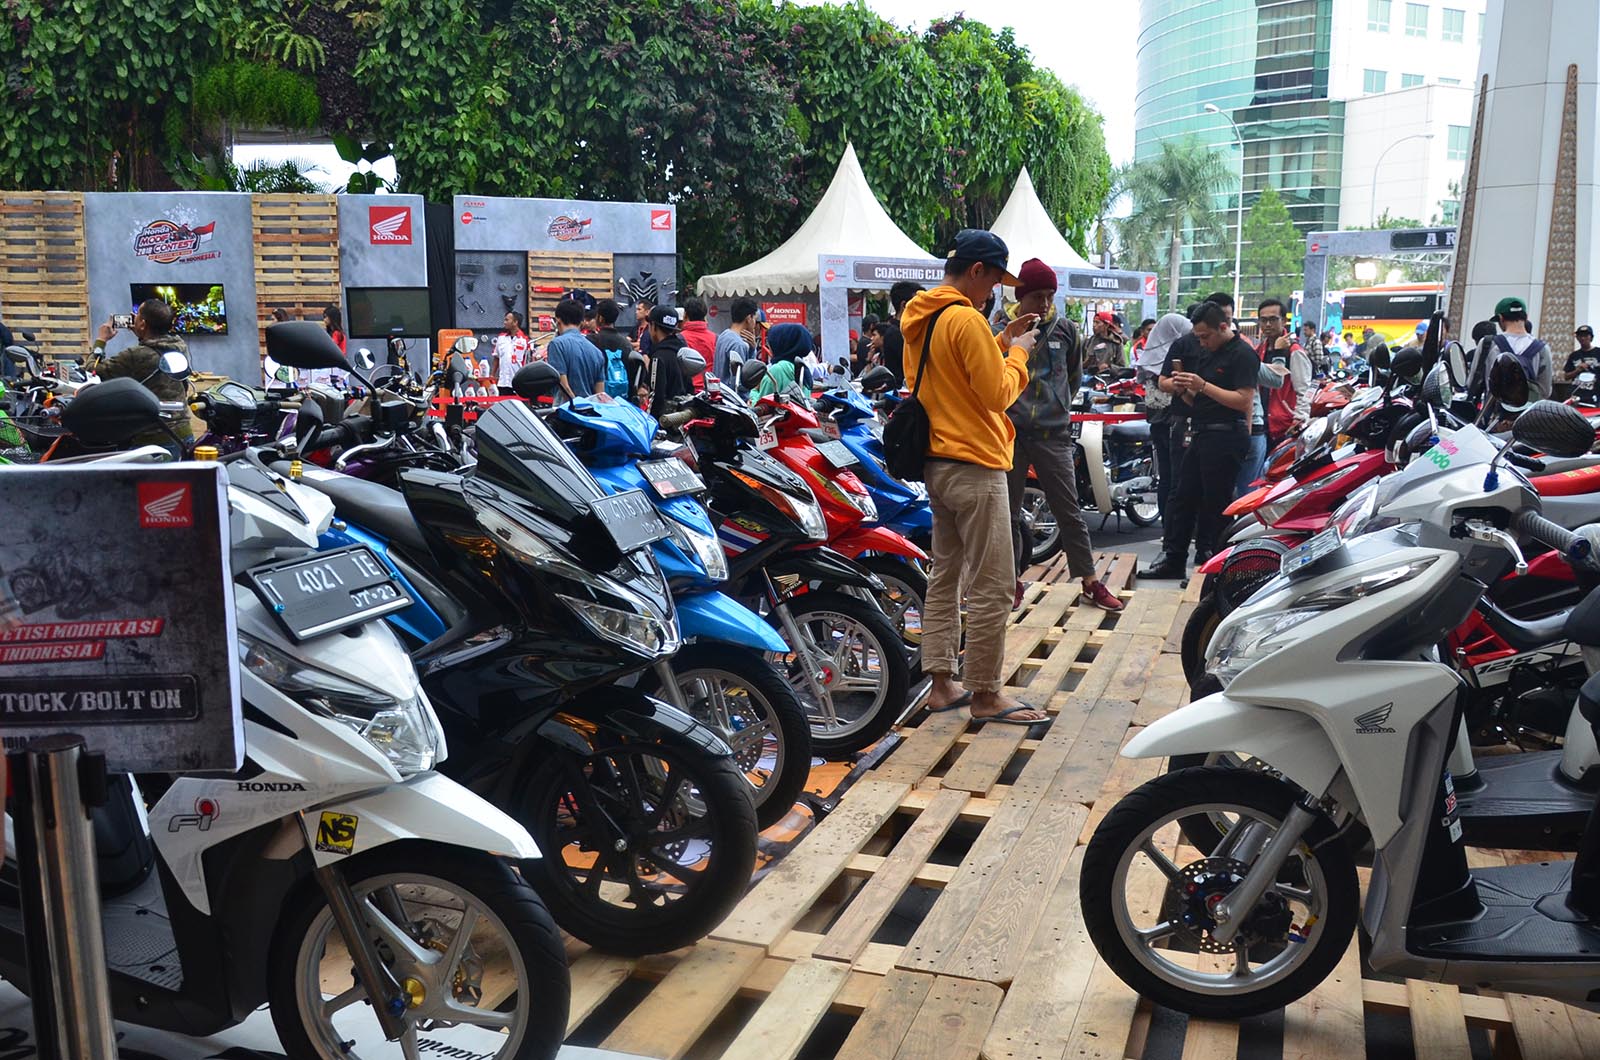 Daftar Pemenang Honda Modif Contest Bandung Gilamotor